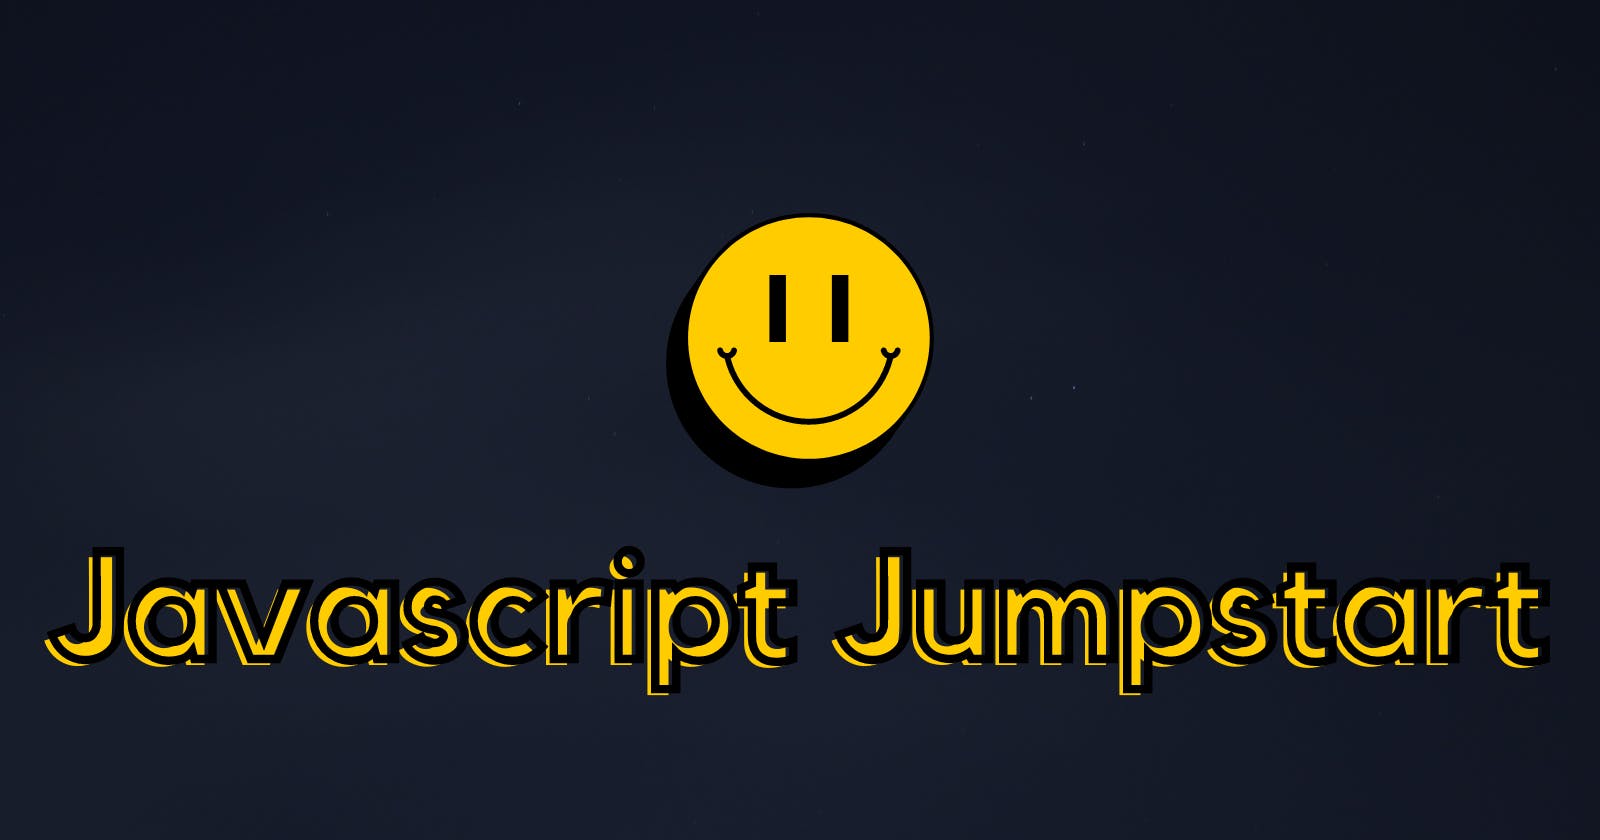 Javascript Jumpstart - Overview